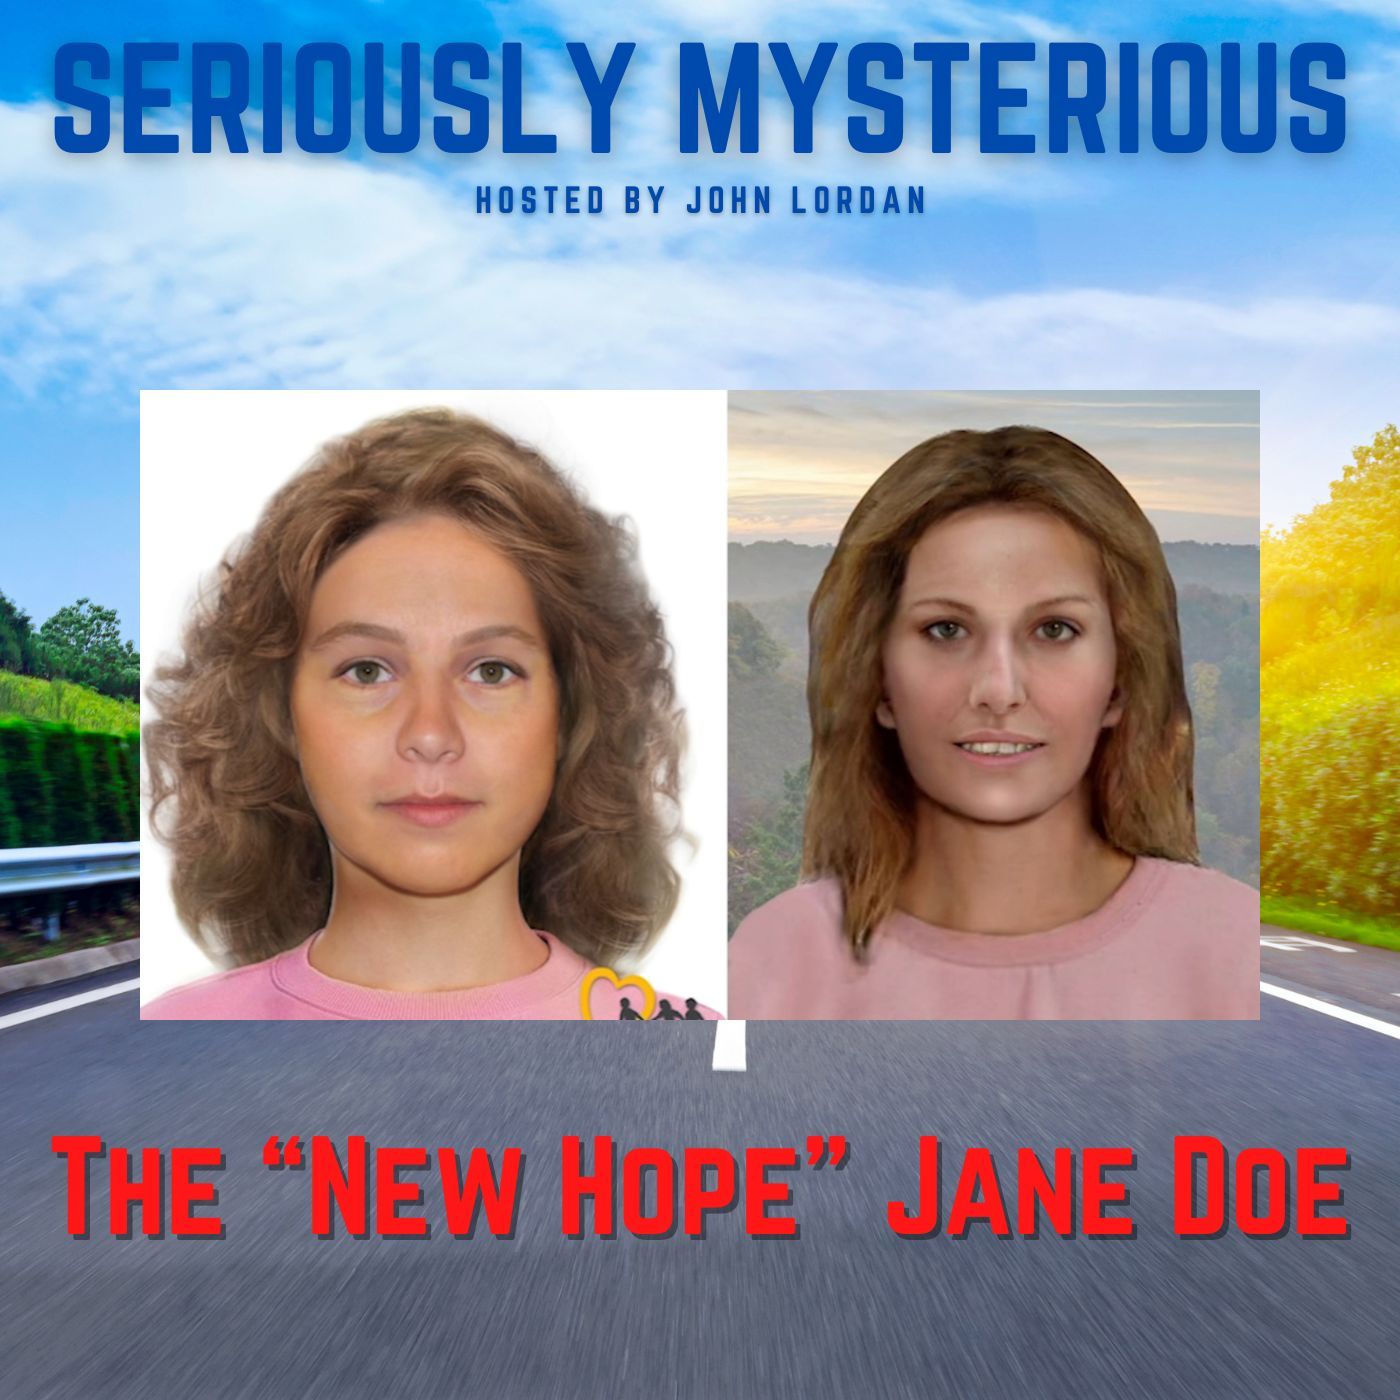 The "New Hope" Jane Doe